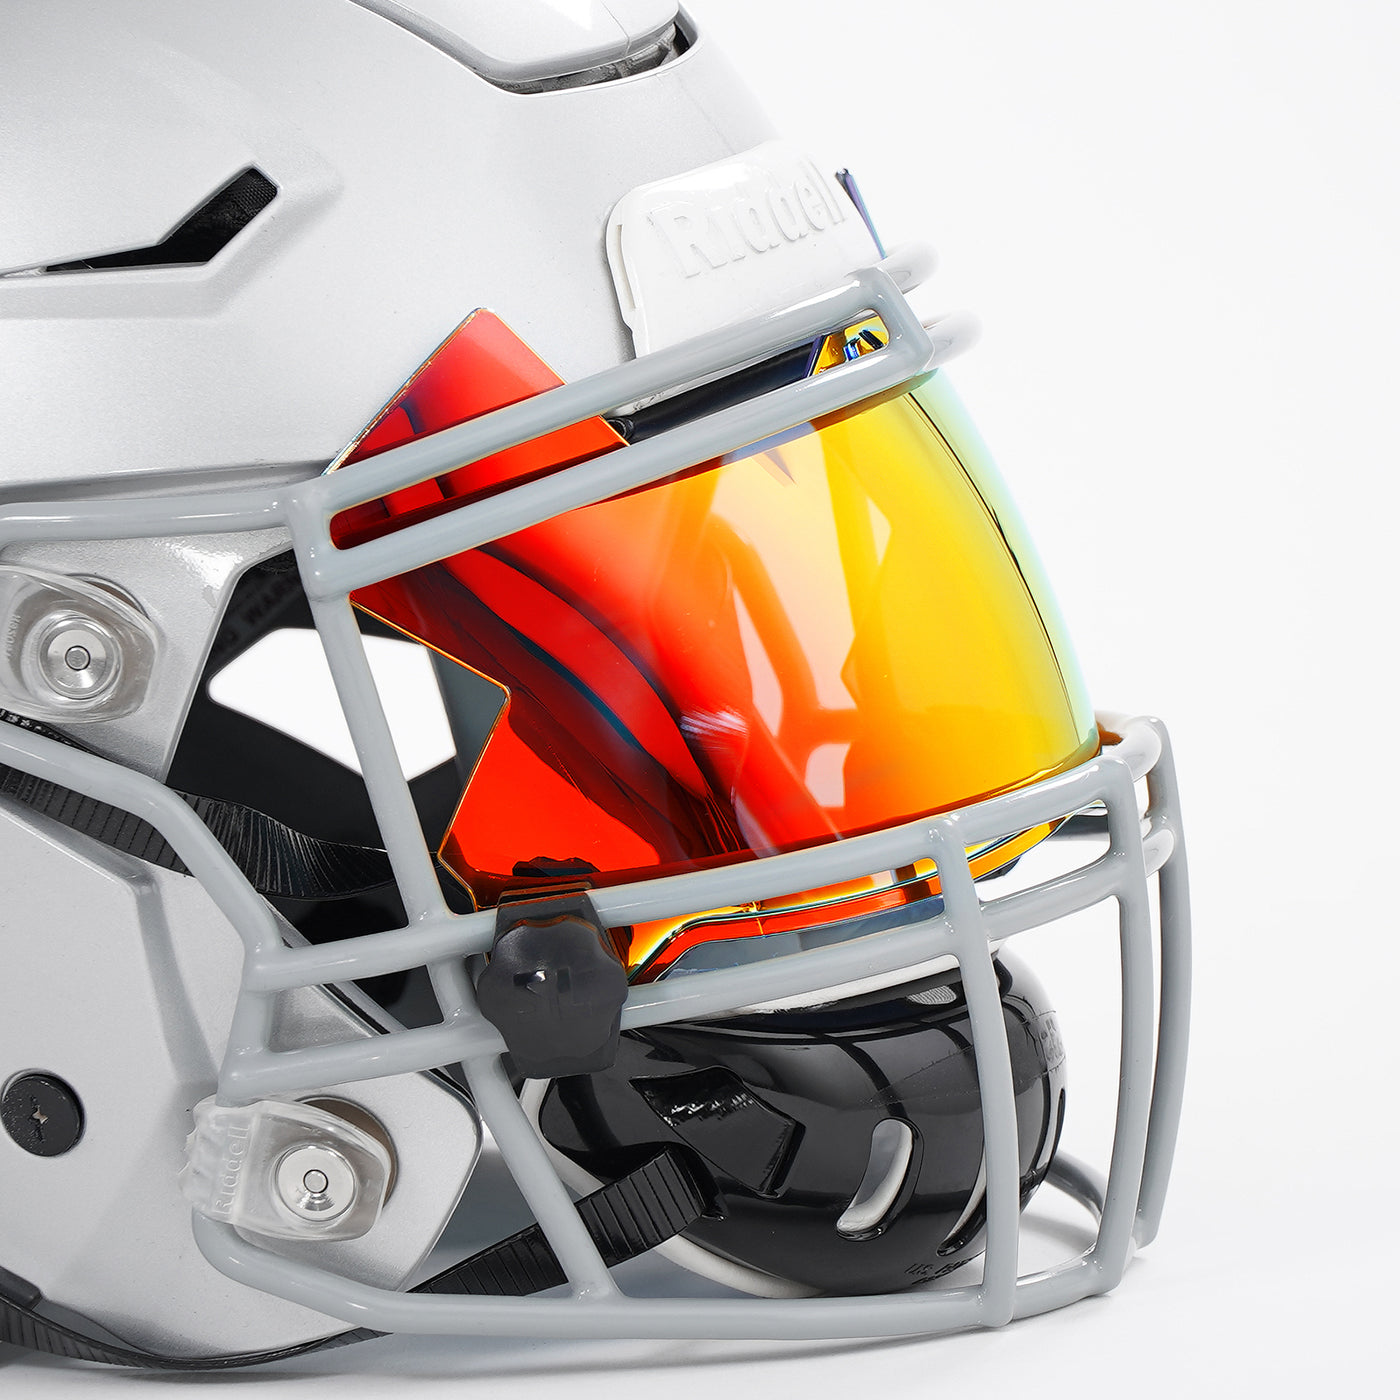 Firestorm Red SX2 Helmet Eye-Shield Visor